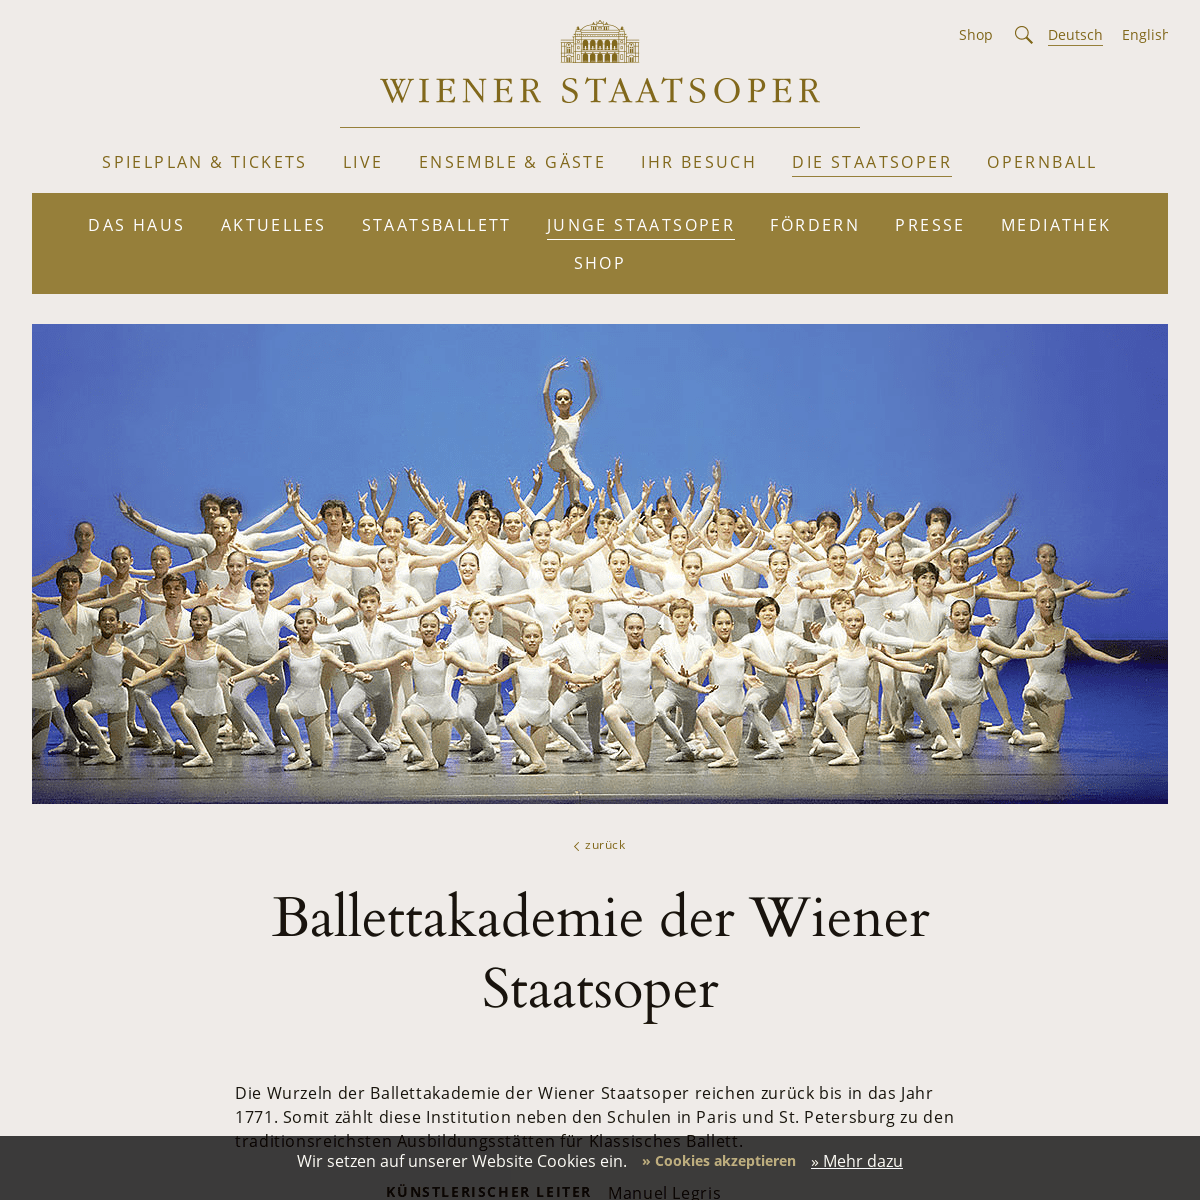  Ballettakademie | Junge Staatsoper | Die Staatsoper | Wiener Staatsoper